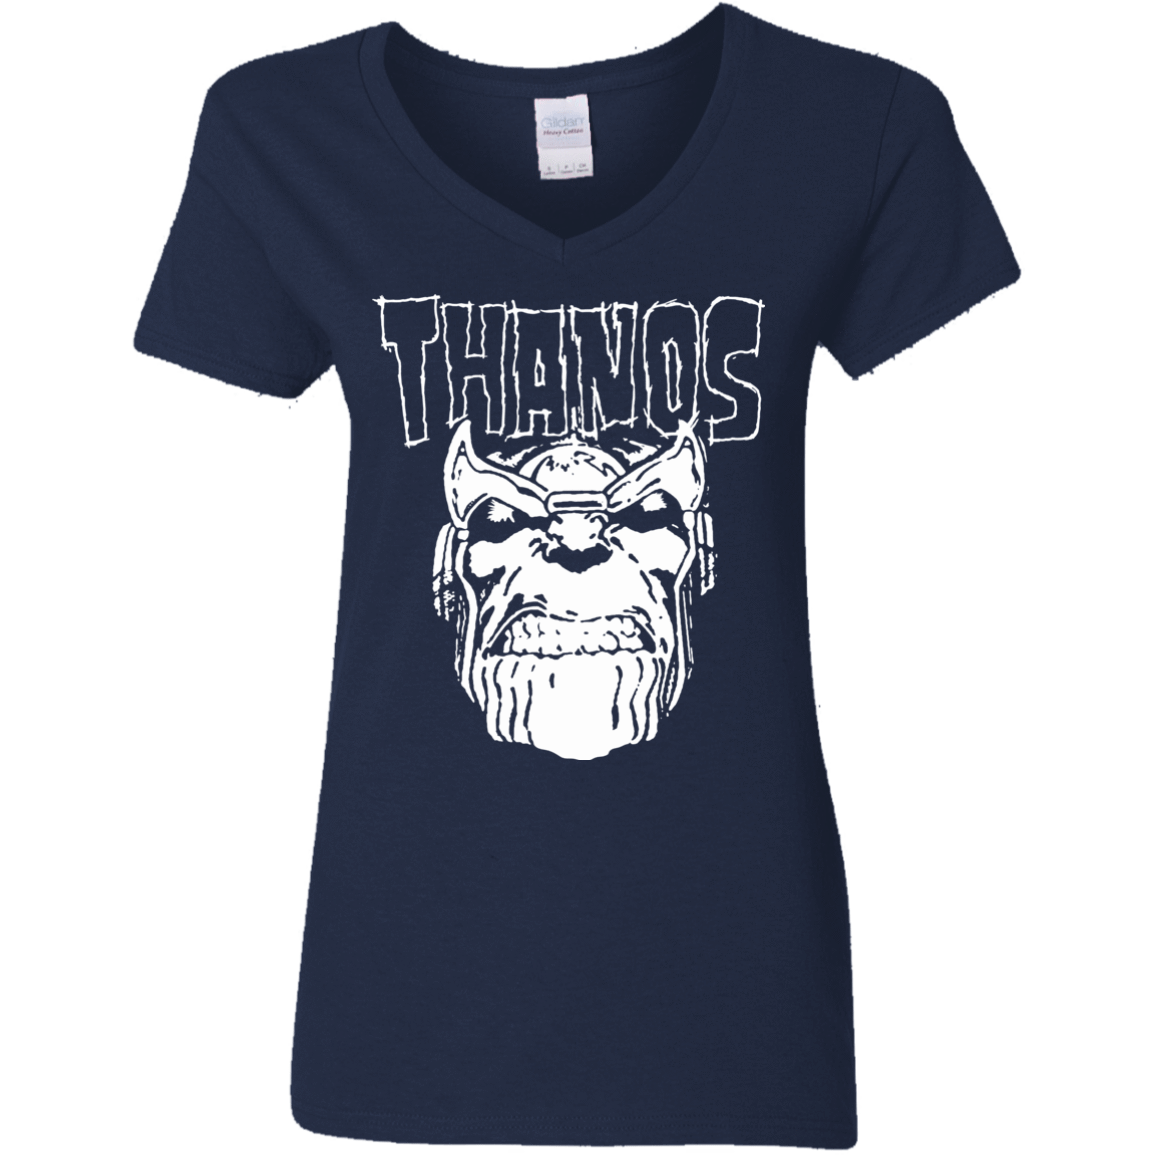 T-Shirts Navy / S Thanos Danzig Women's V-Neck T-Shirt